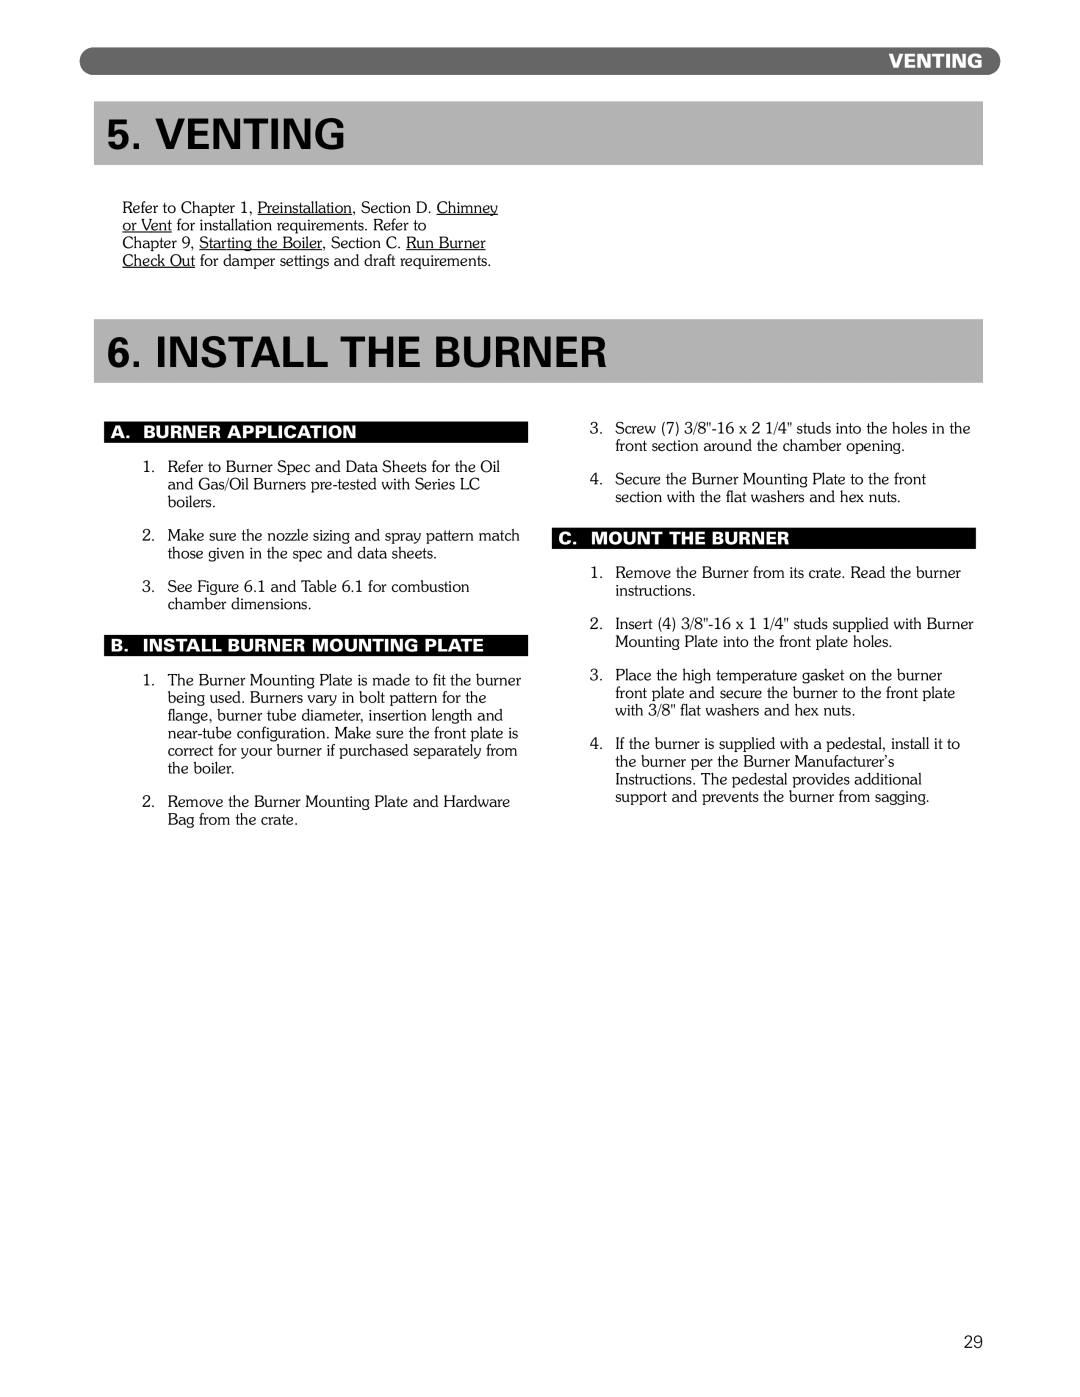 PB Heat Gas/Oil Boilers manual Venting, Install The Burner, A.Burner Application, B.Install Burner Mounting Plate 